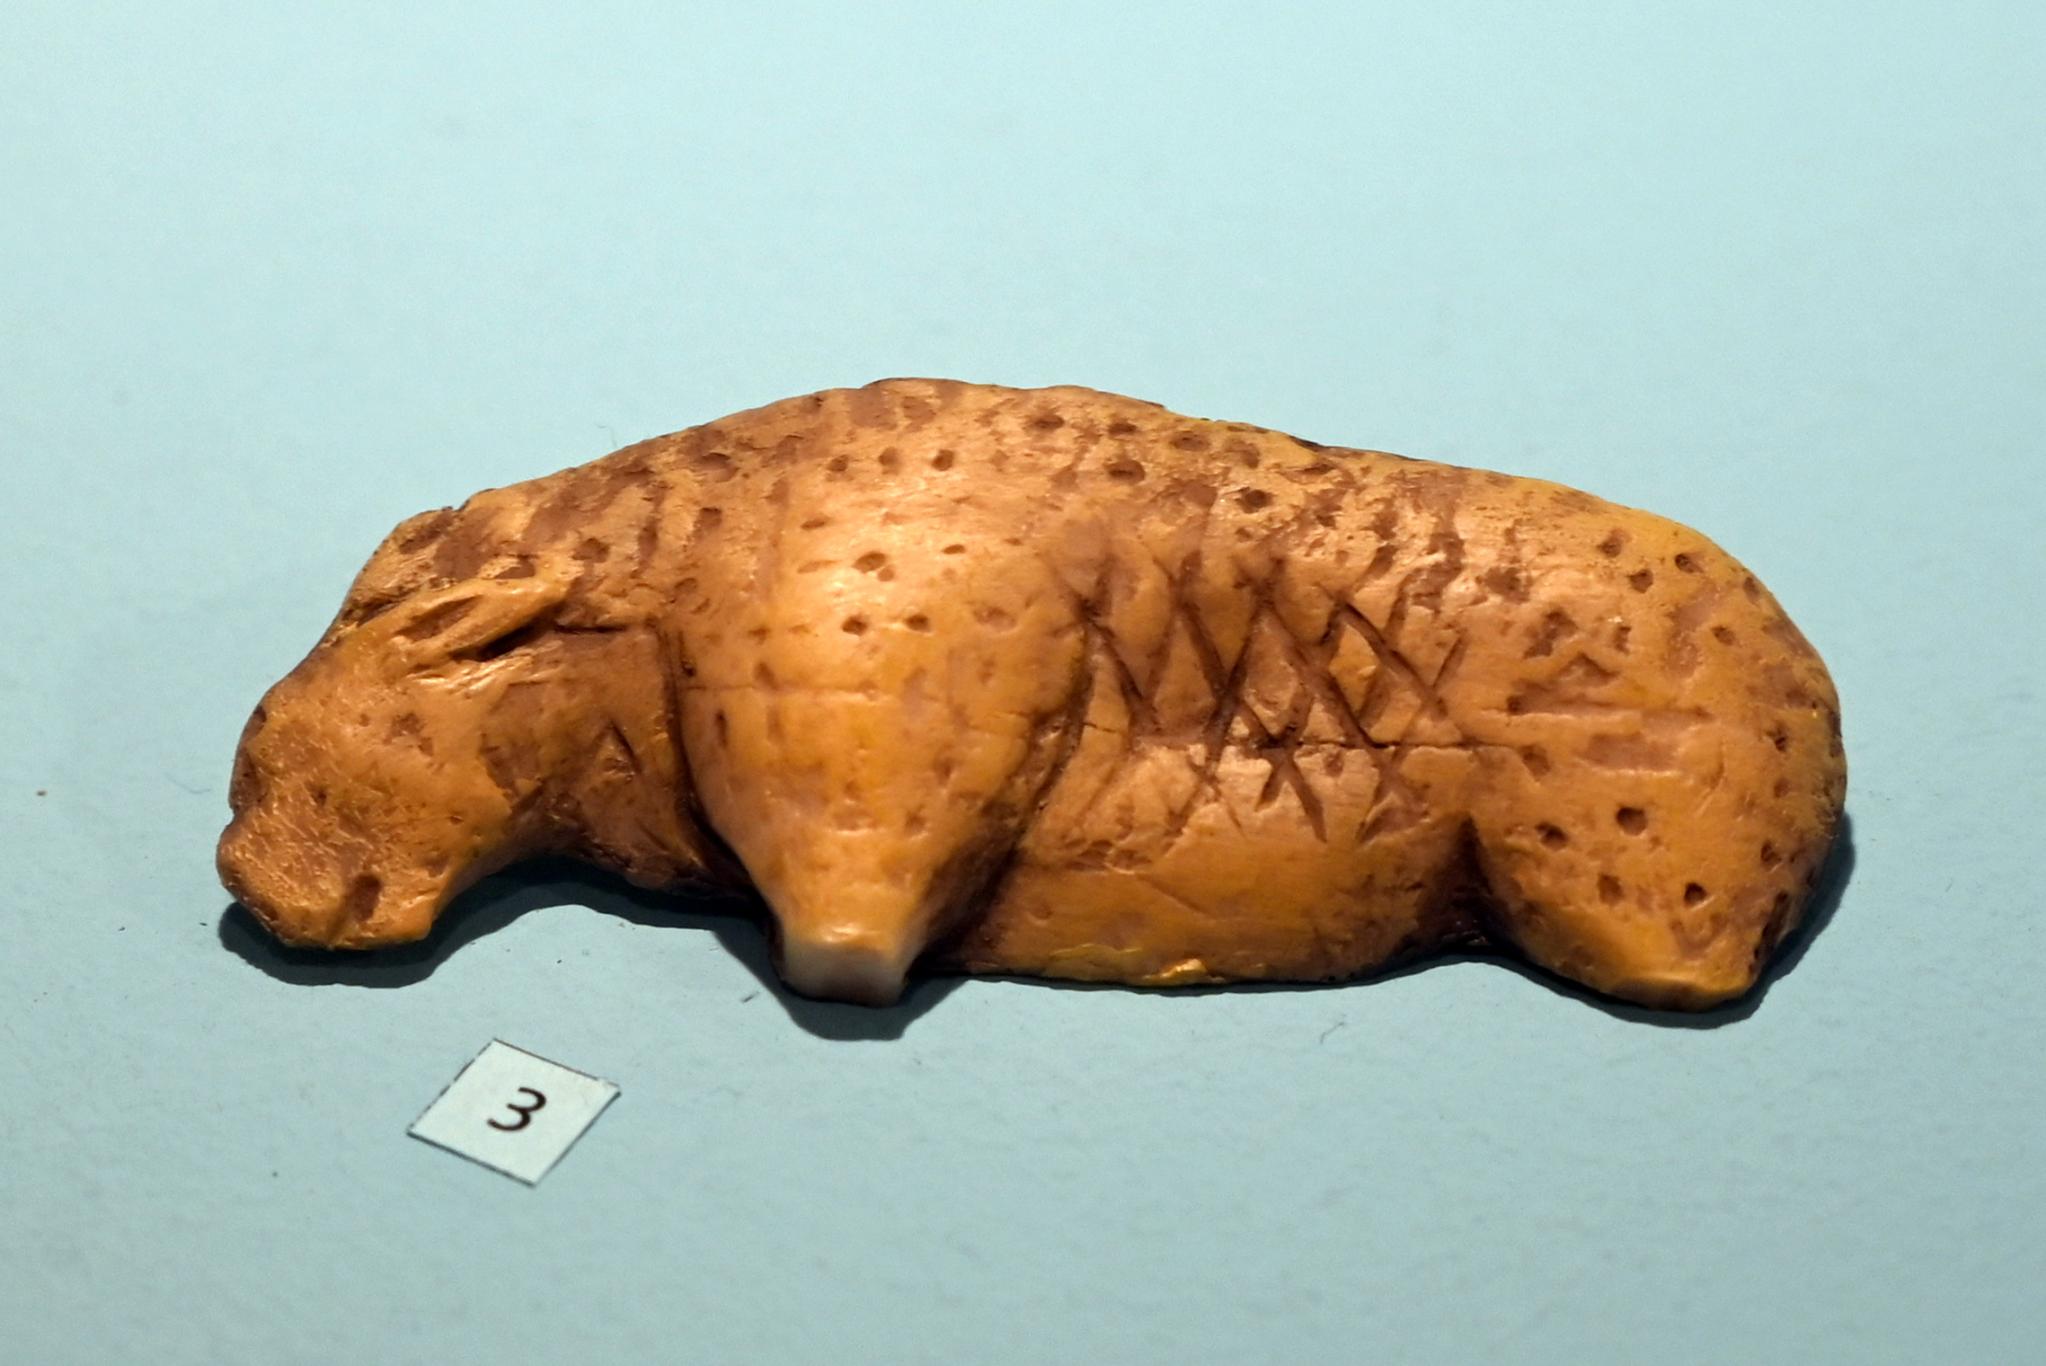 Löwe (Kopie), 33000 v. Chr., Bild 1/2